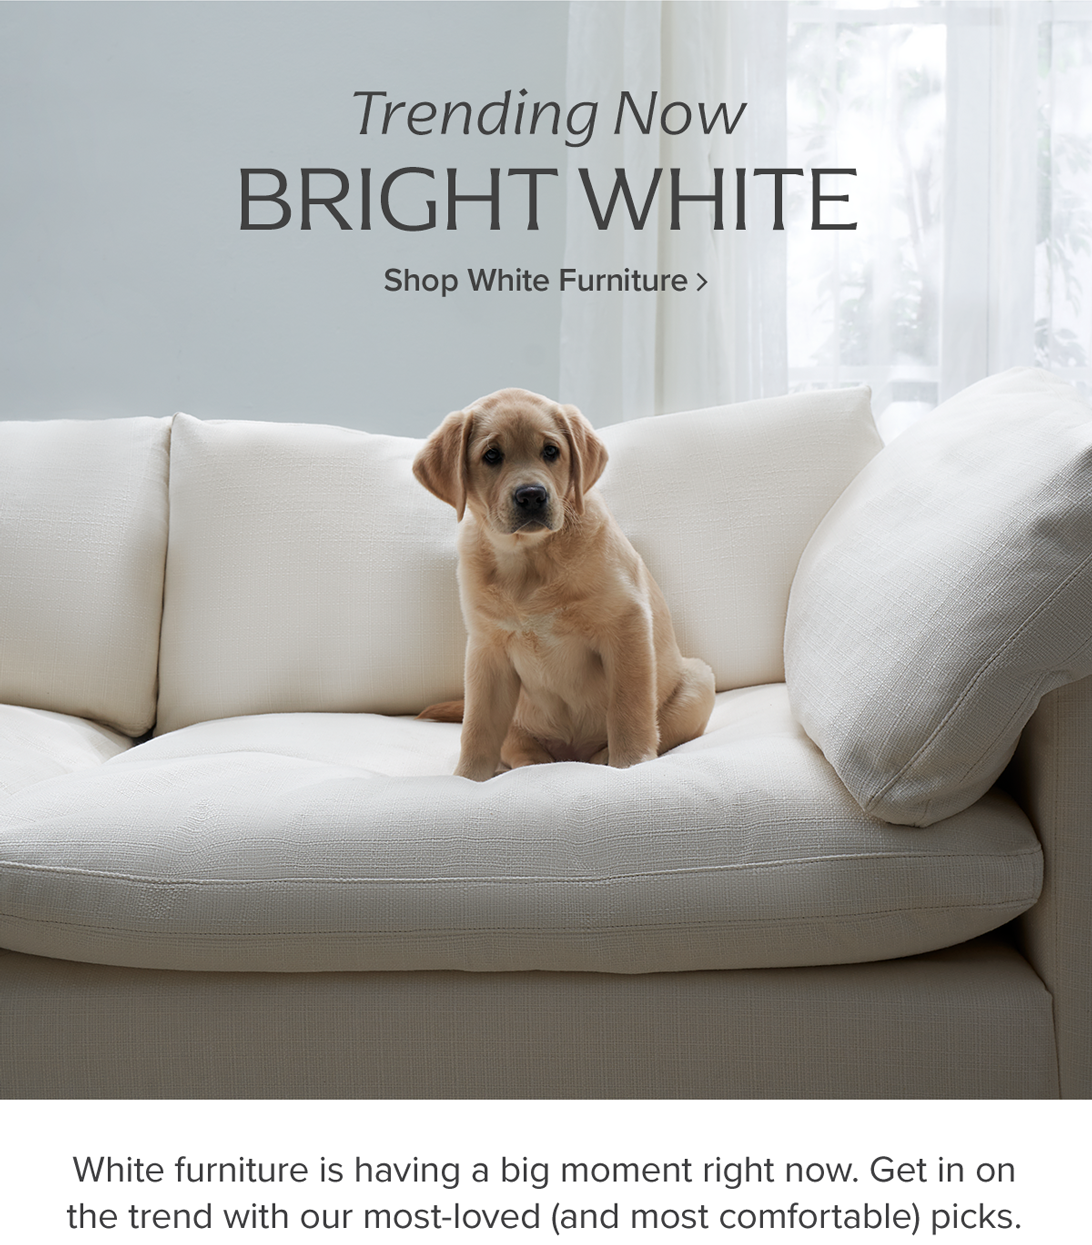 Trending Now: Bright White